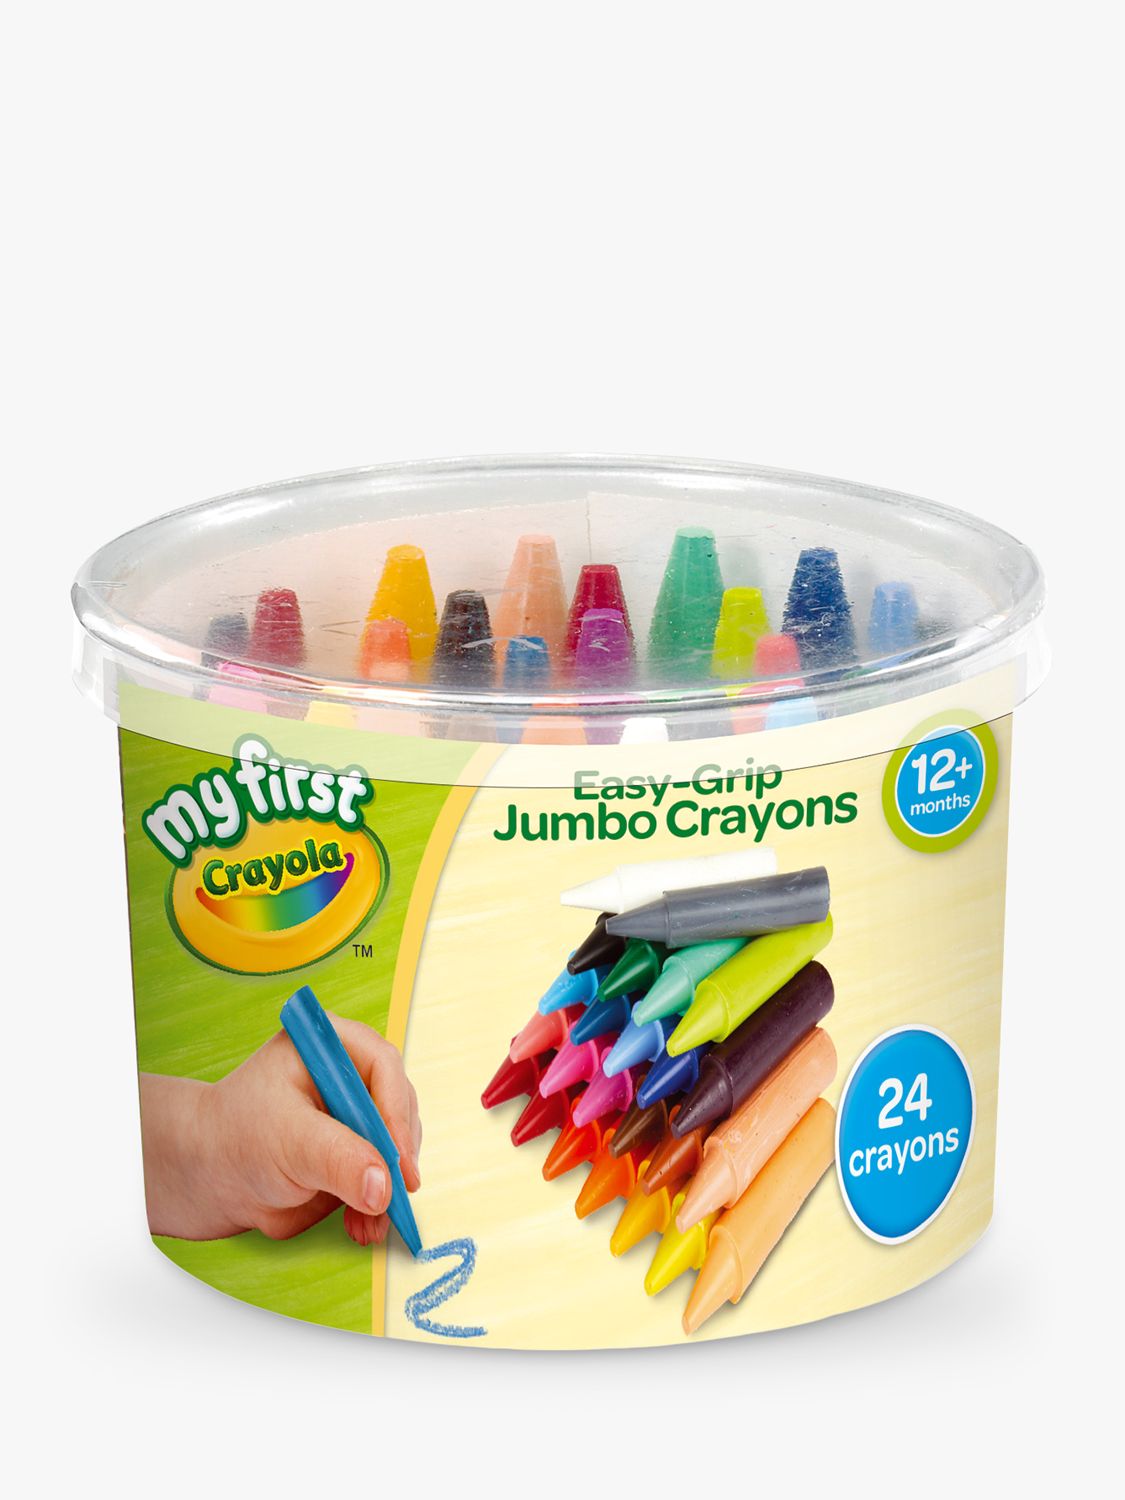 Crayola Jumbo Crayons - J&J Crafts